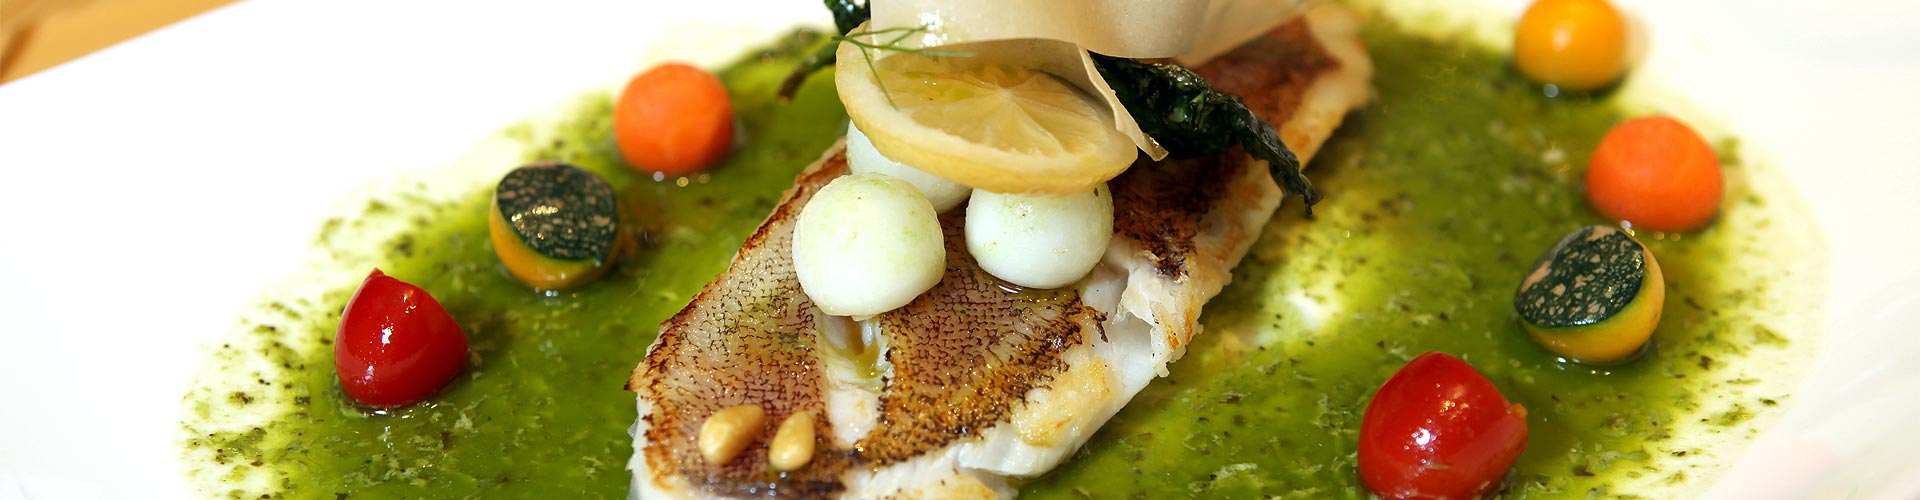 ¿Dónde comer pescado en Soria?